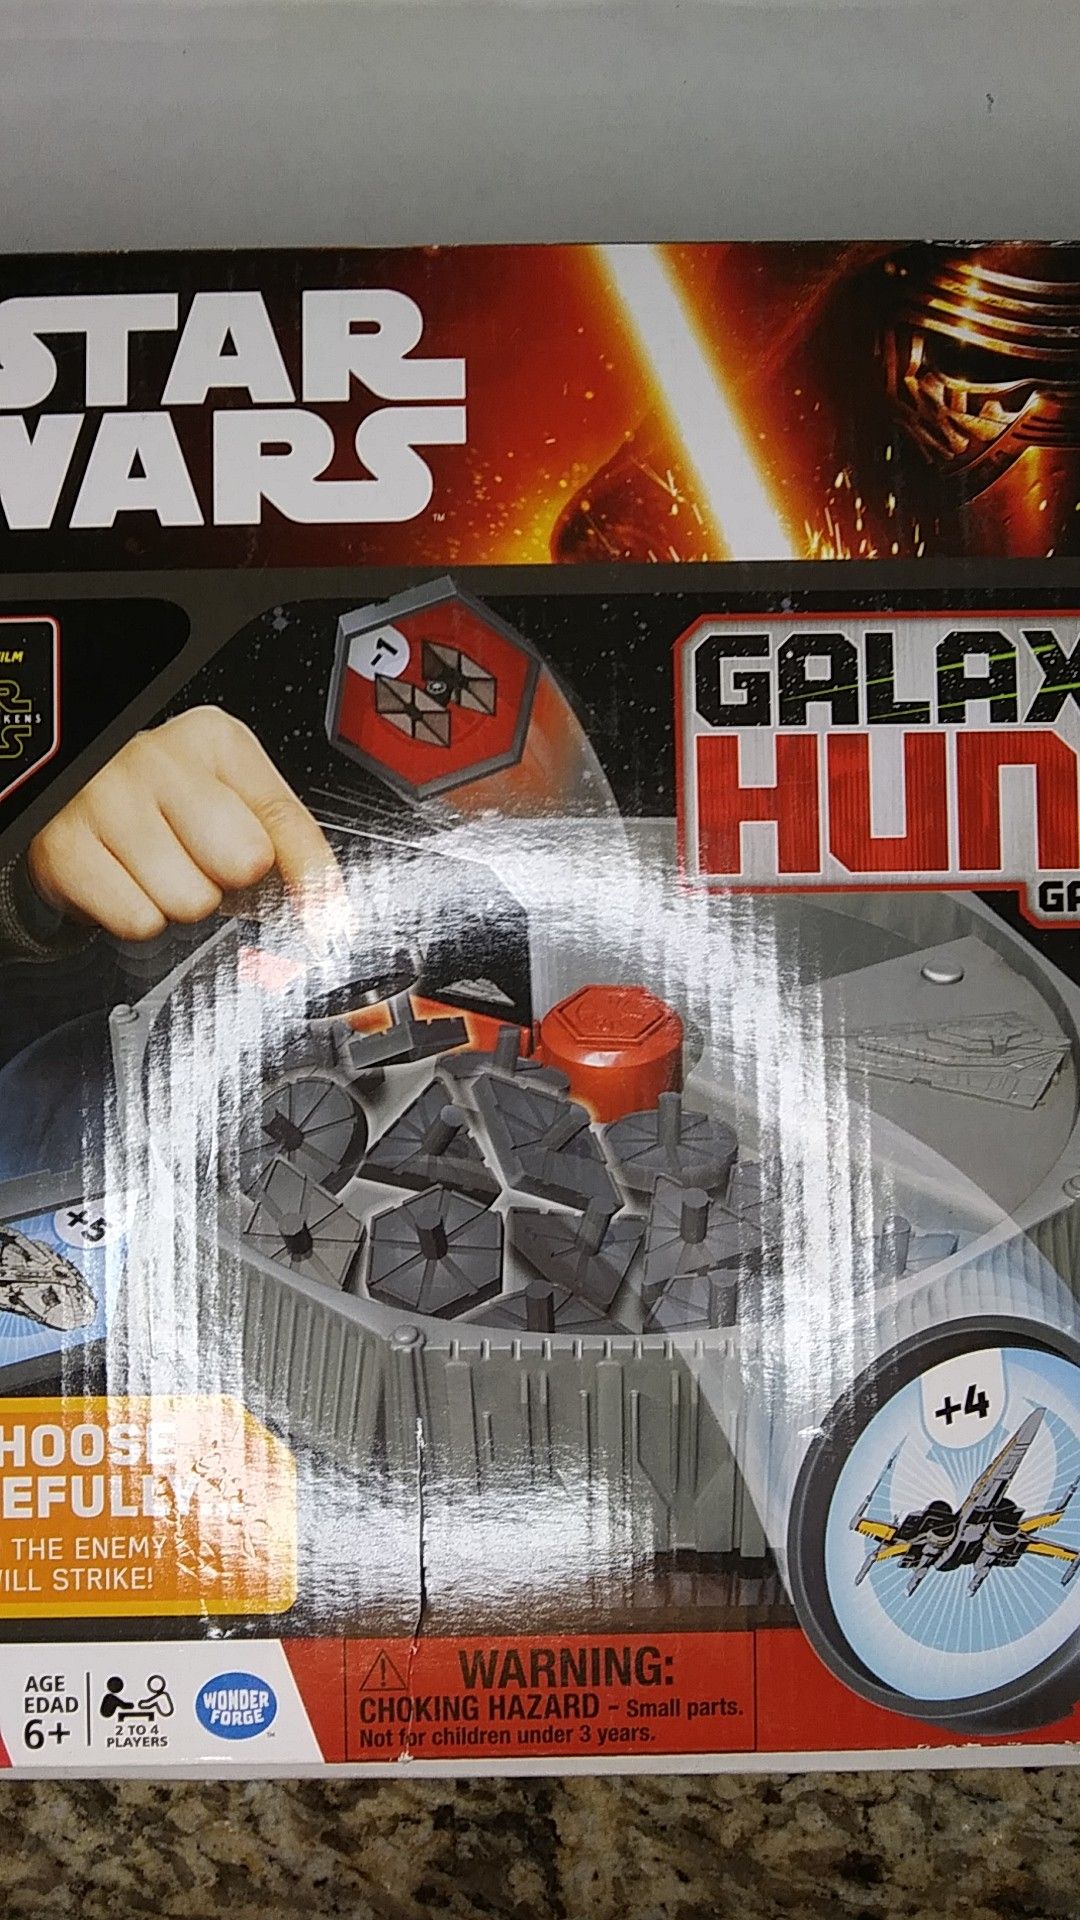 Star wars galaxy hunt board game